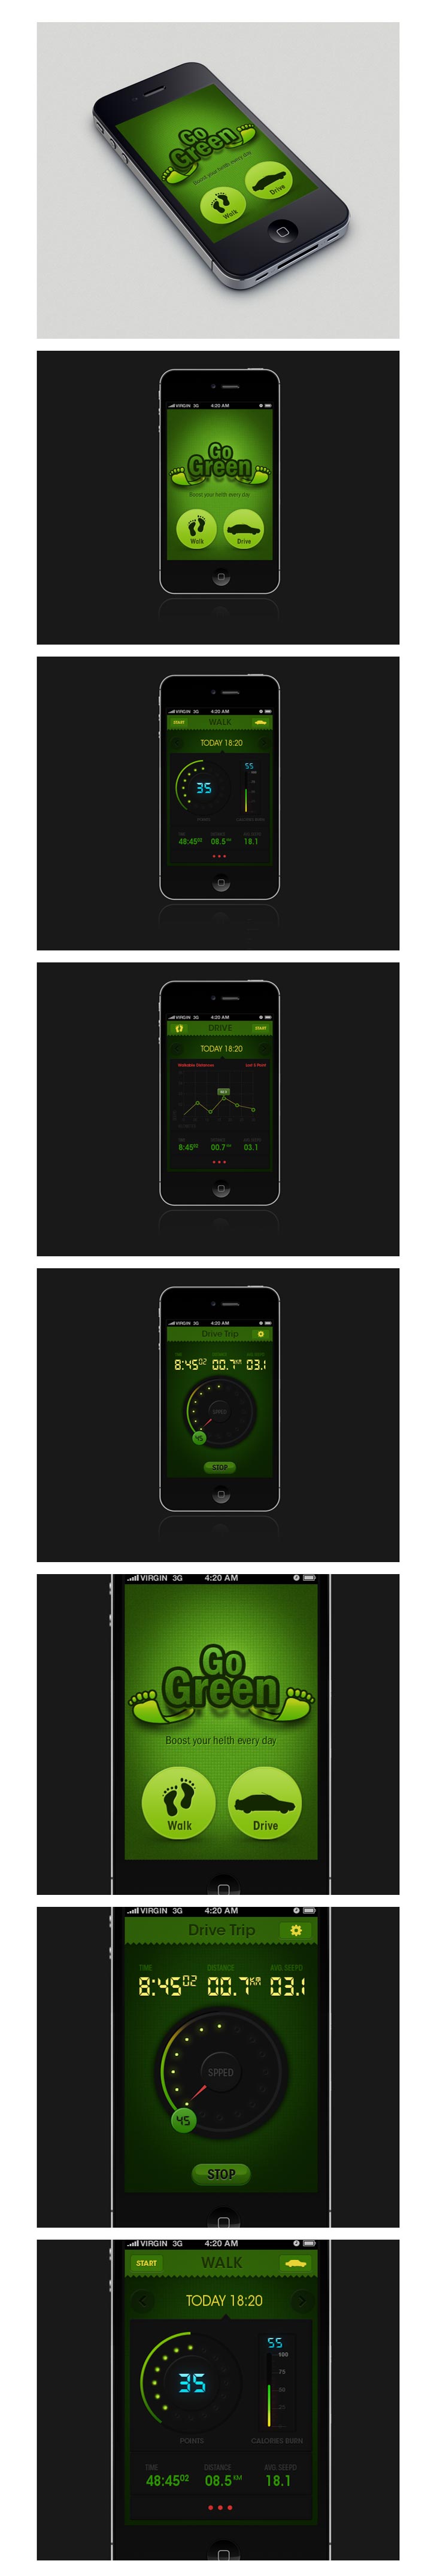 Go Green Iphone app